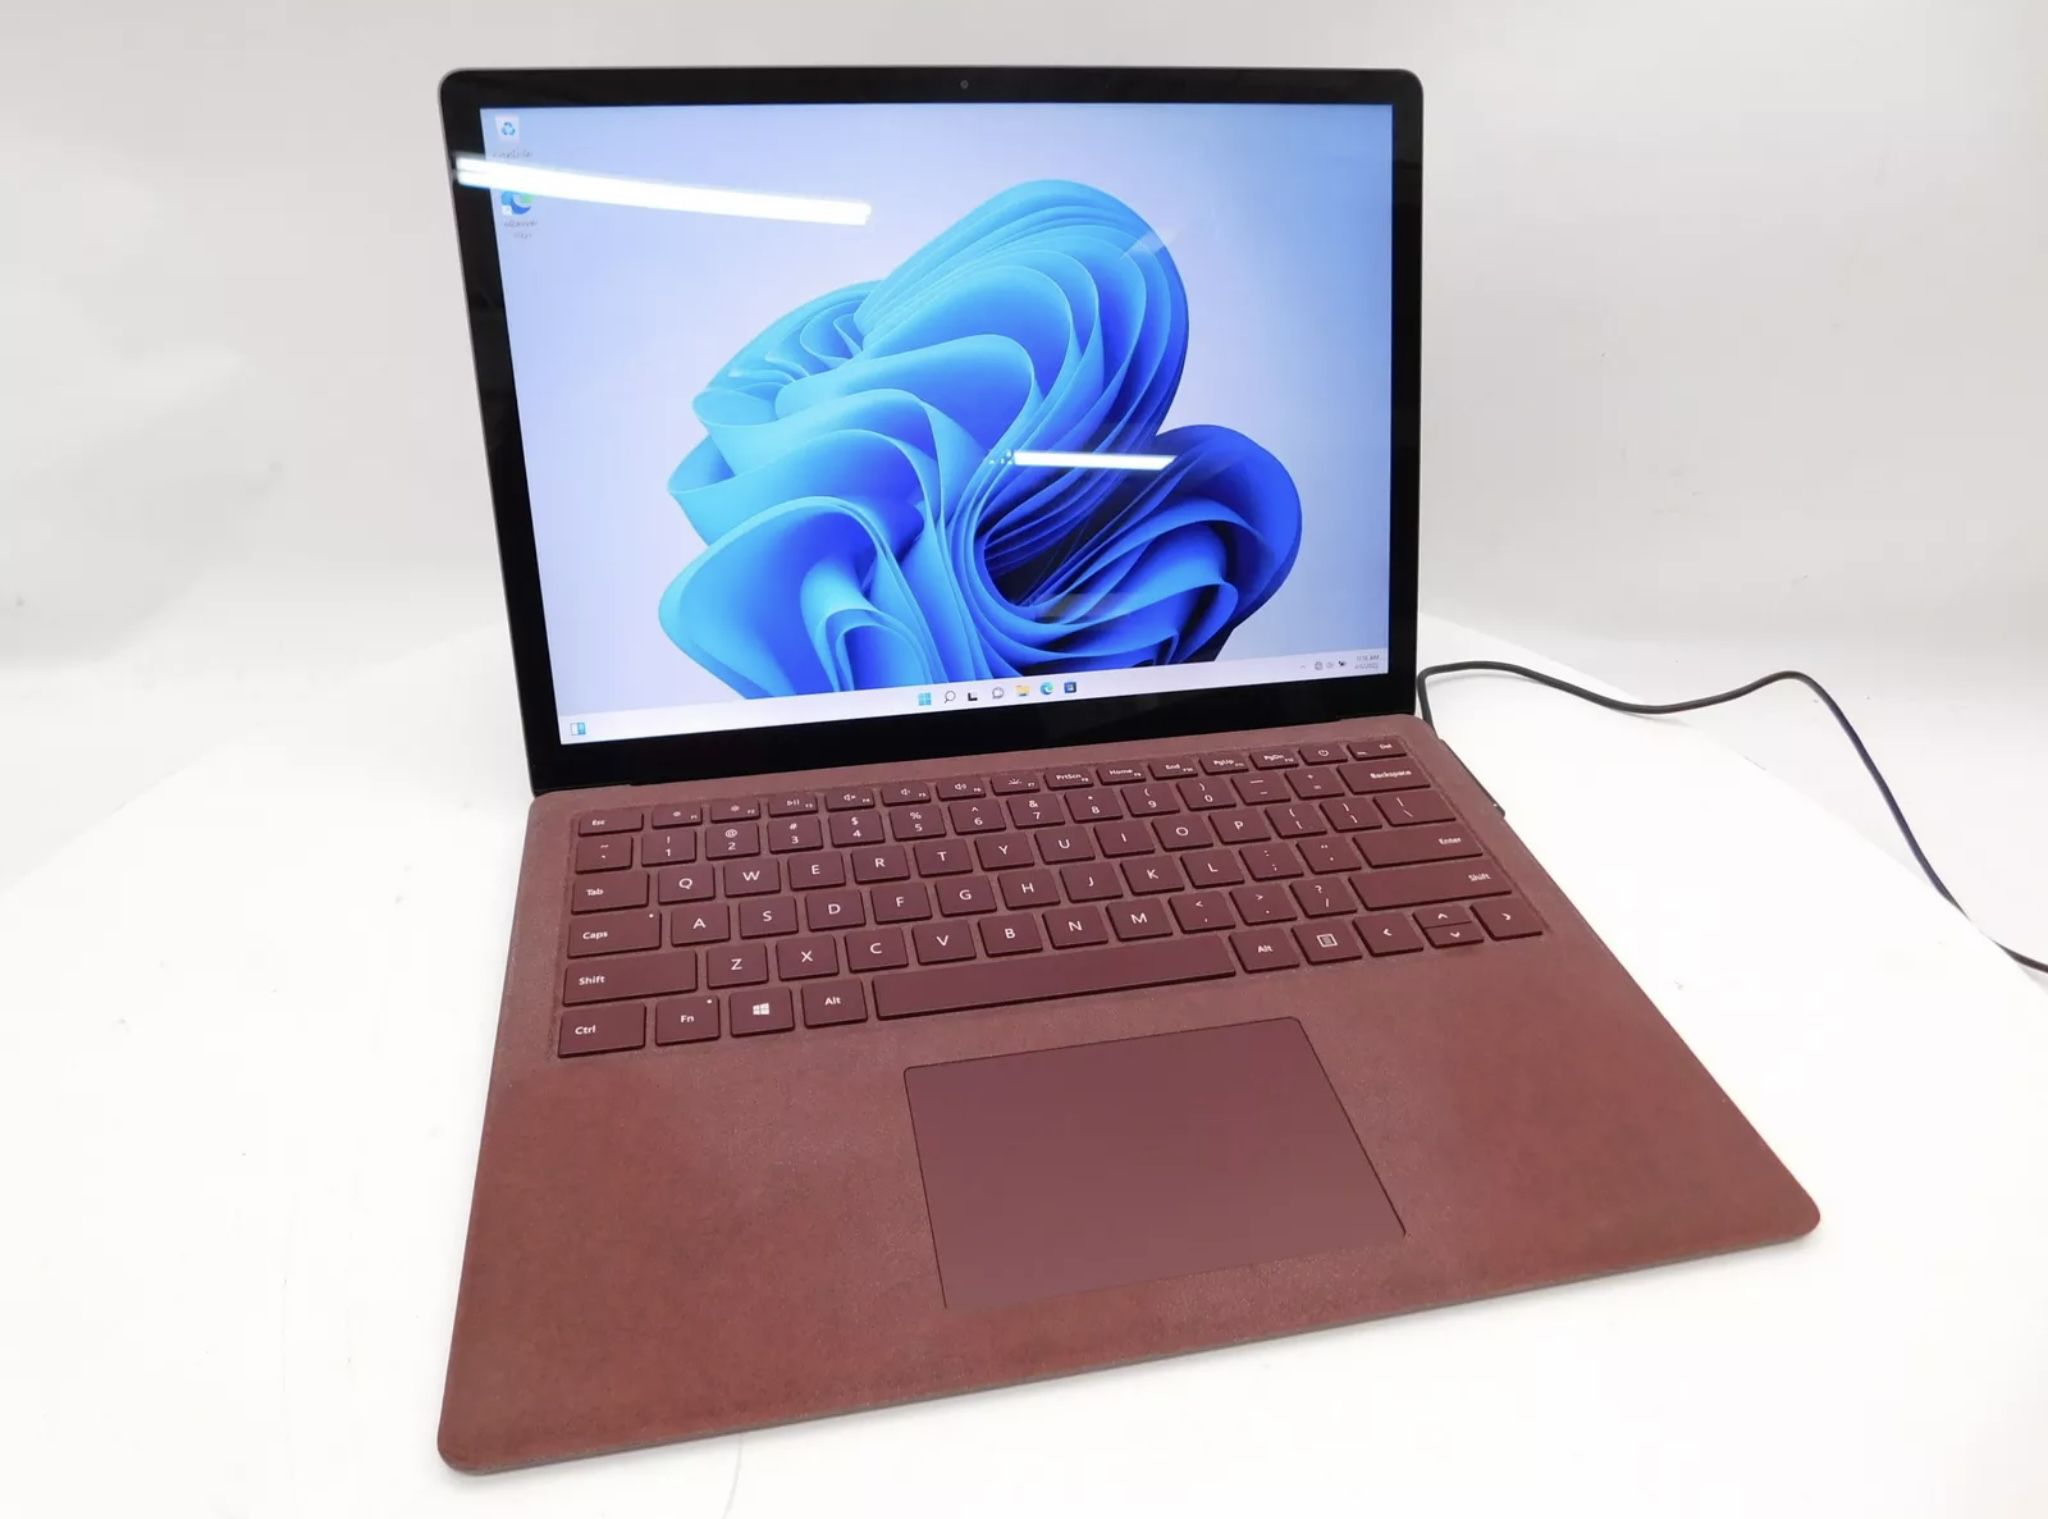 Microsoft Laptop i5 256gb hd, 8gb Ram Touch Screen